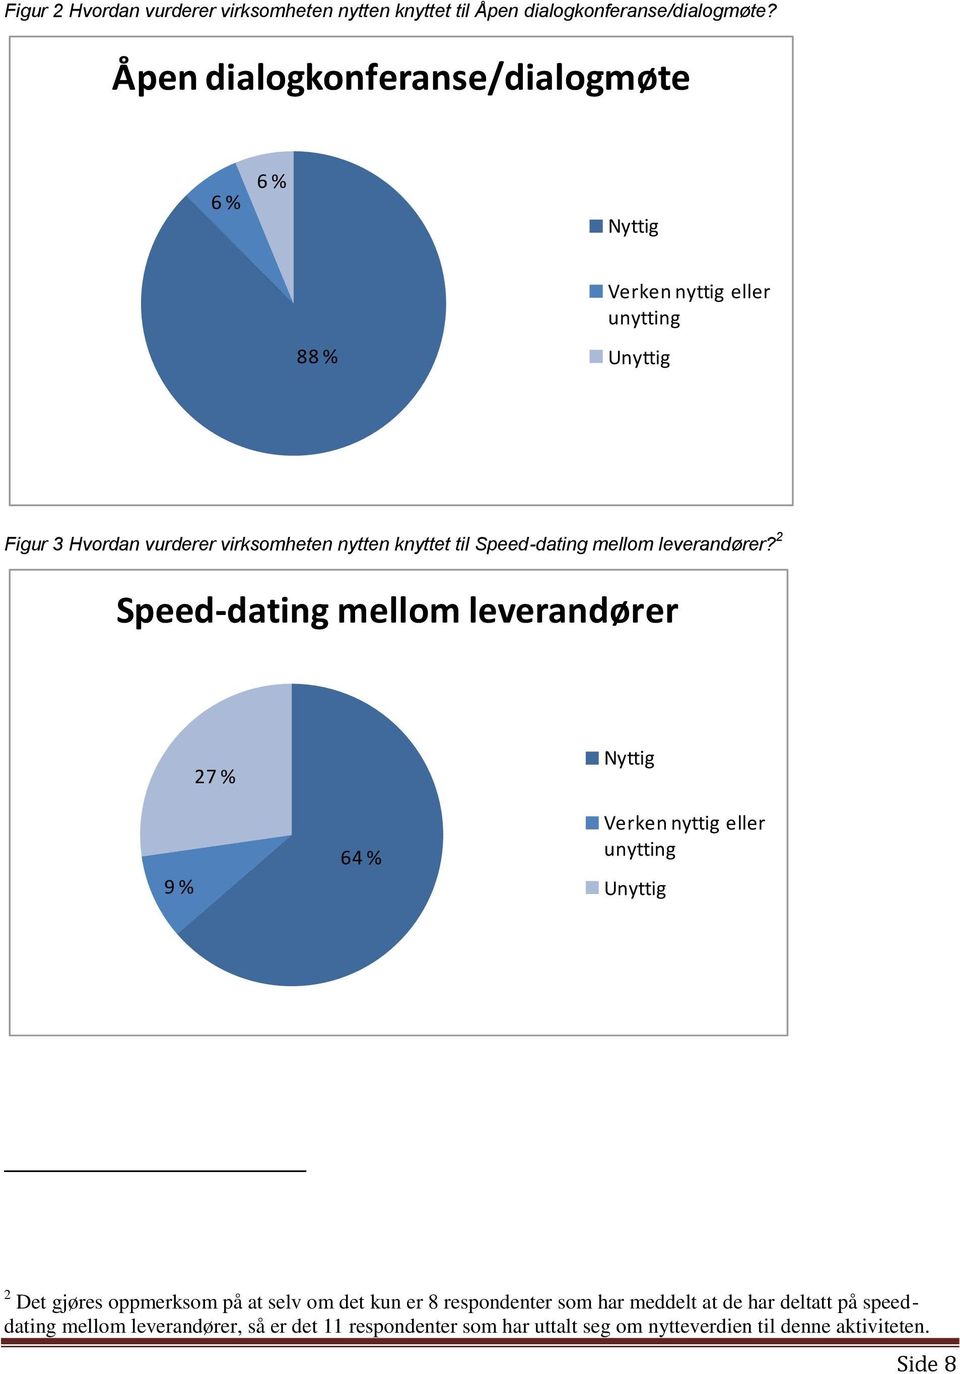 Speed-dating mellom leverandører?